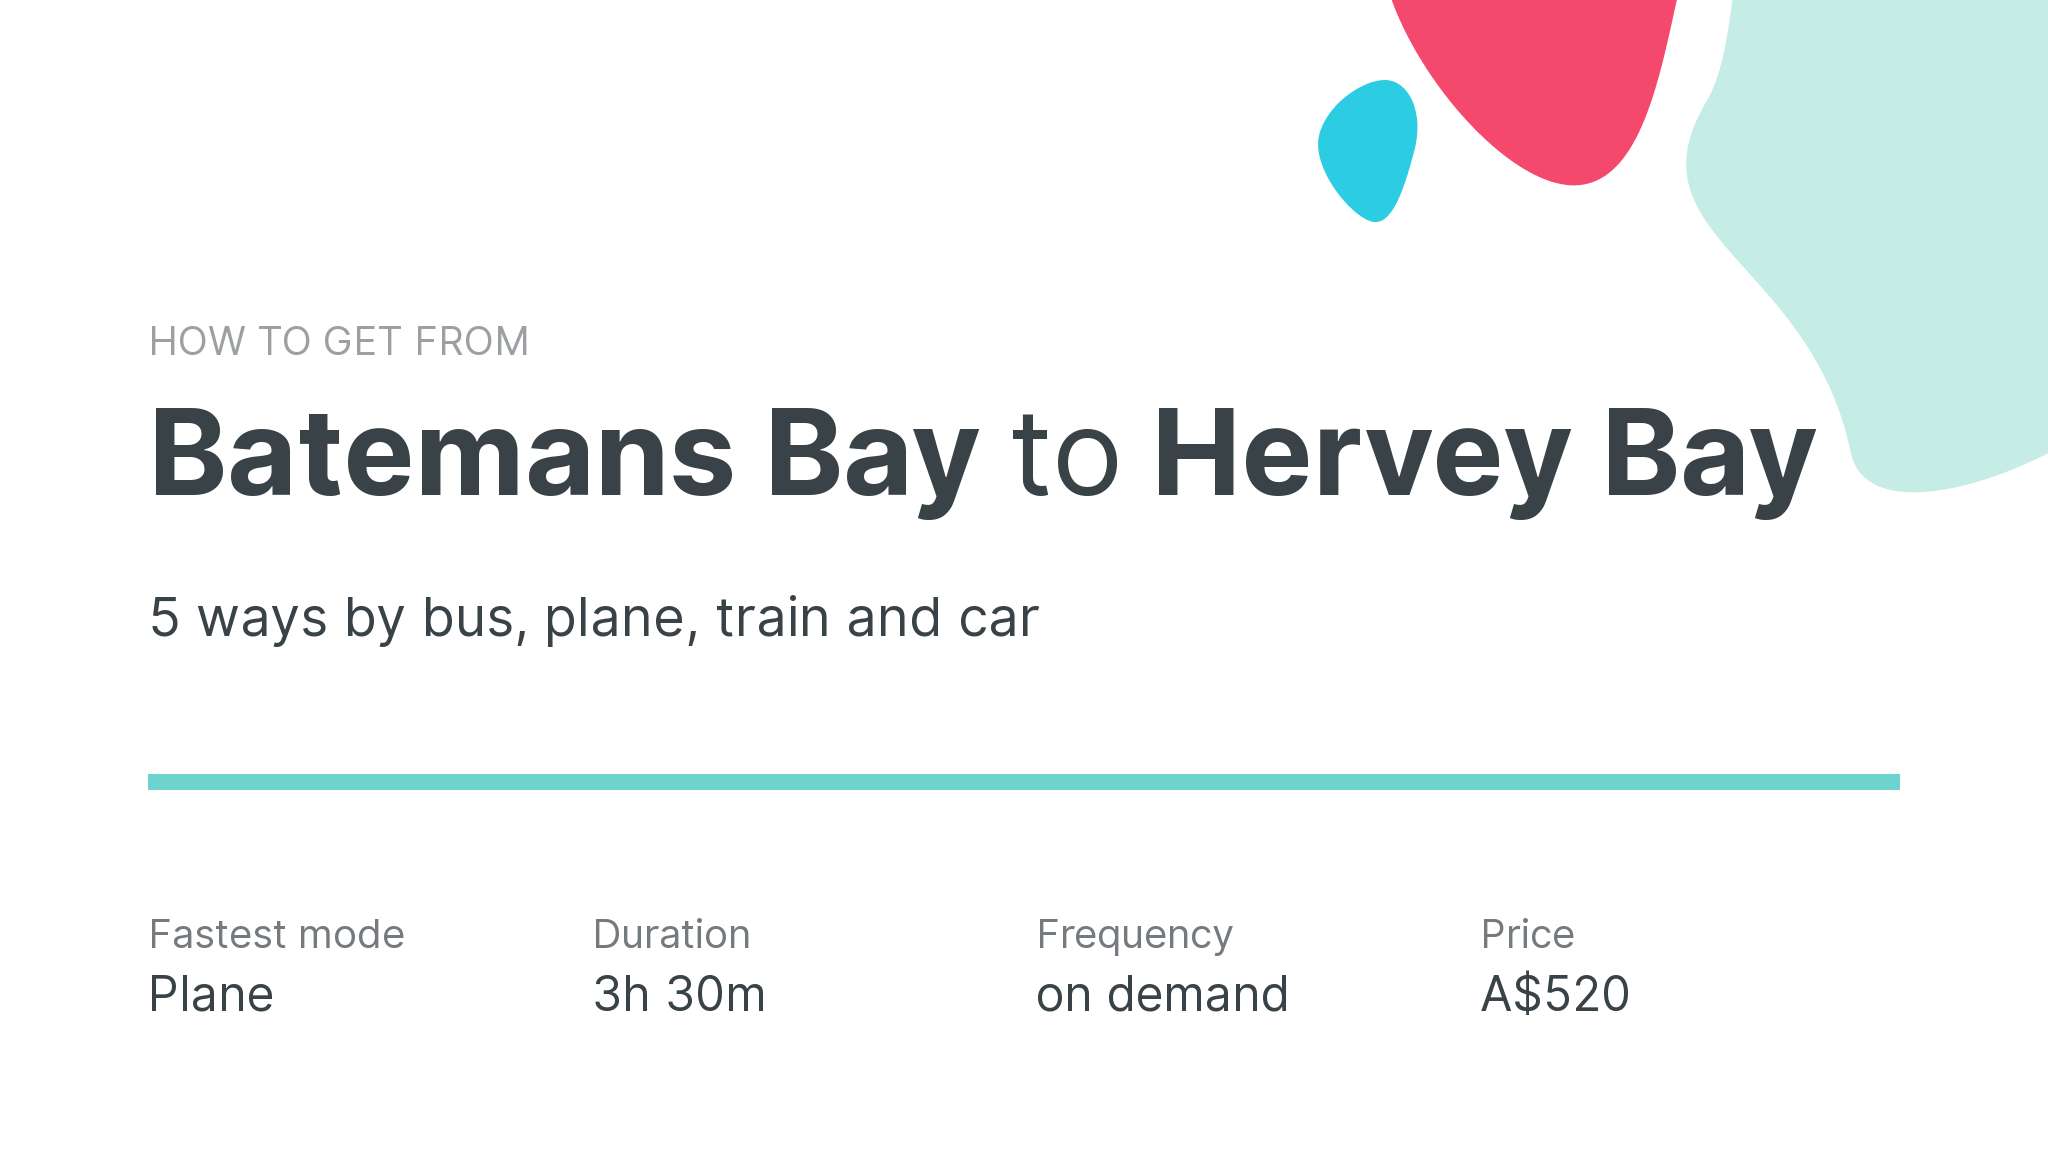 How do I get from Batemans Bay to Hervey Bay